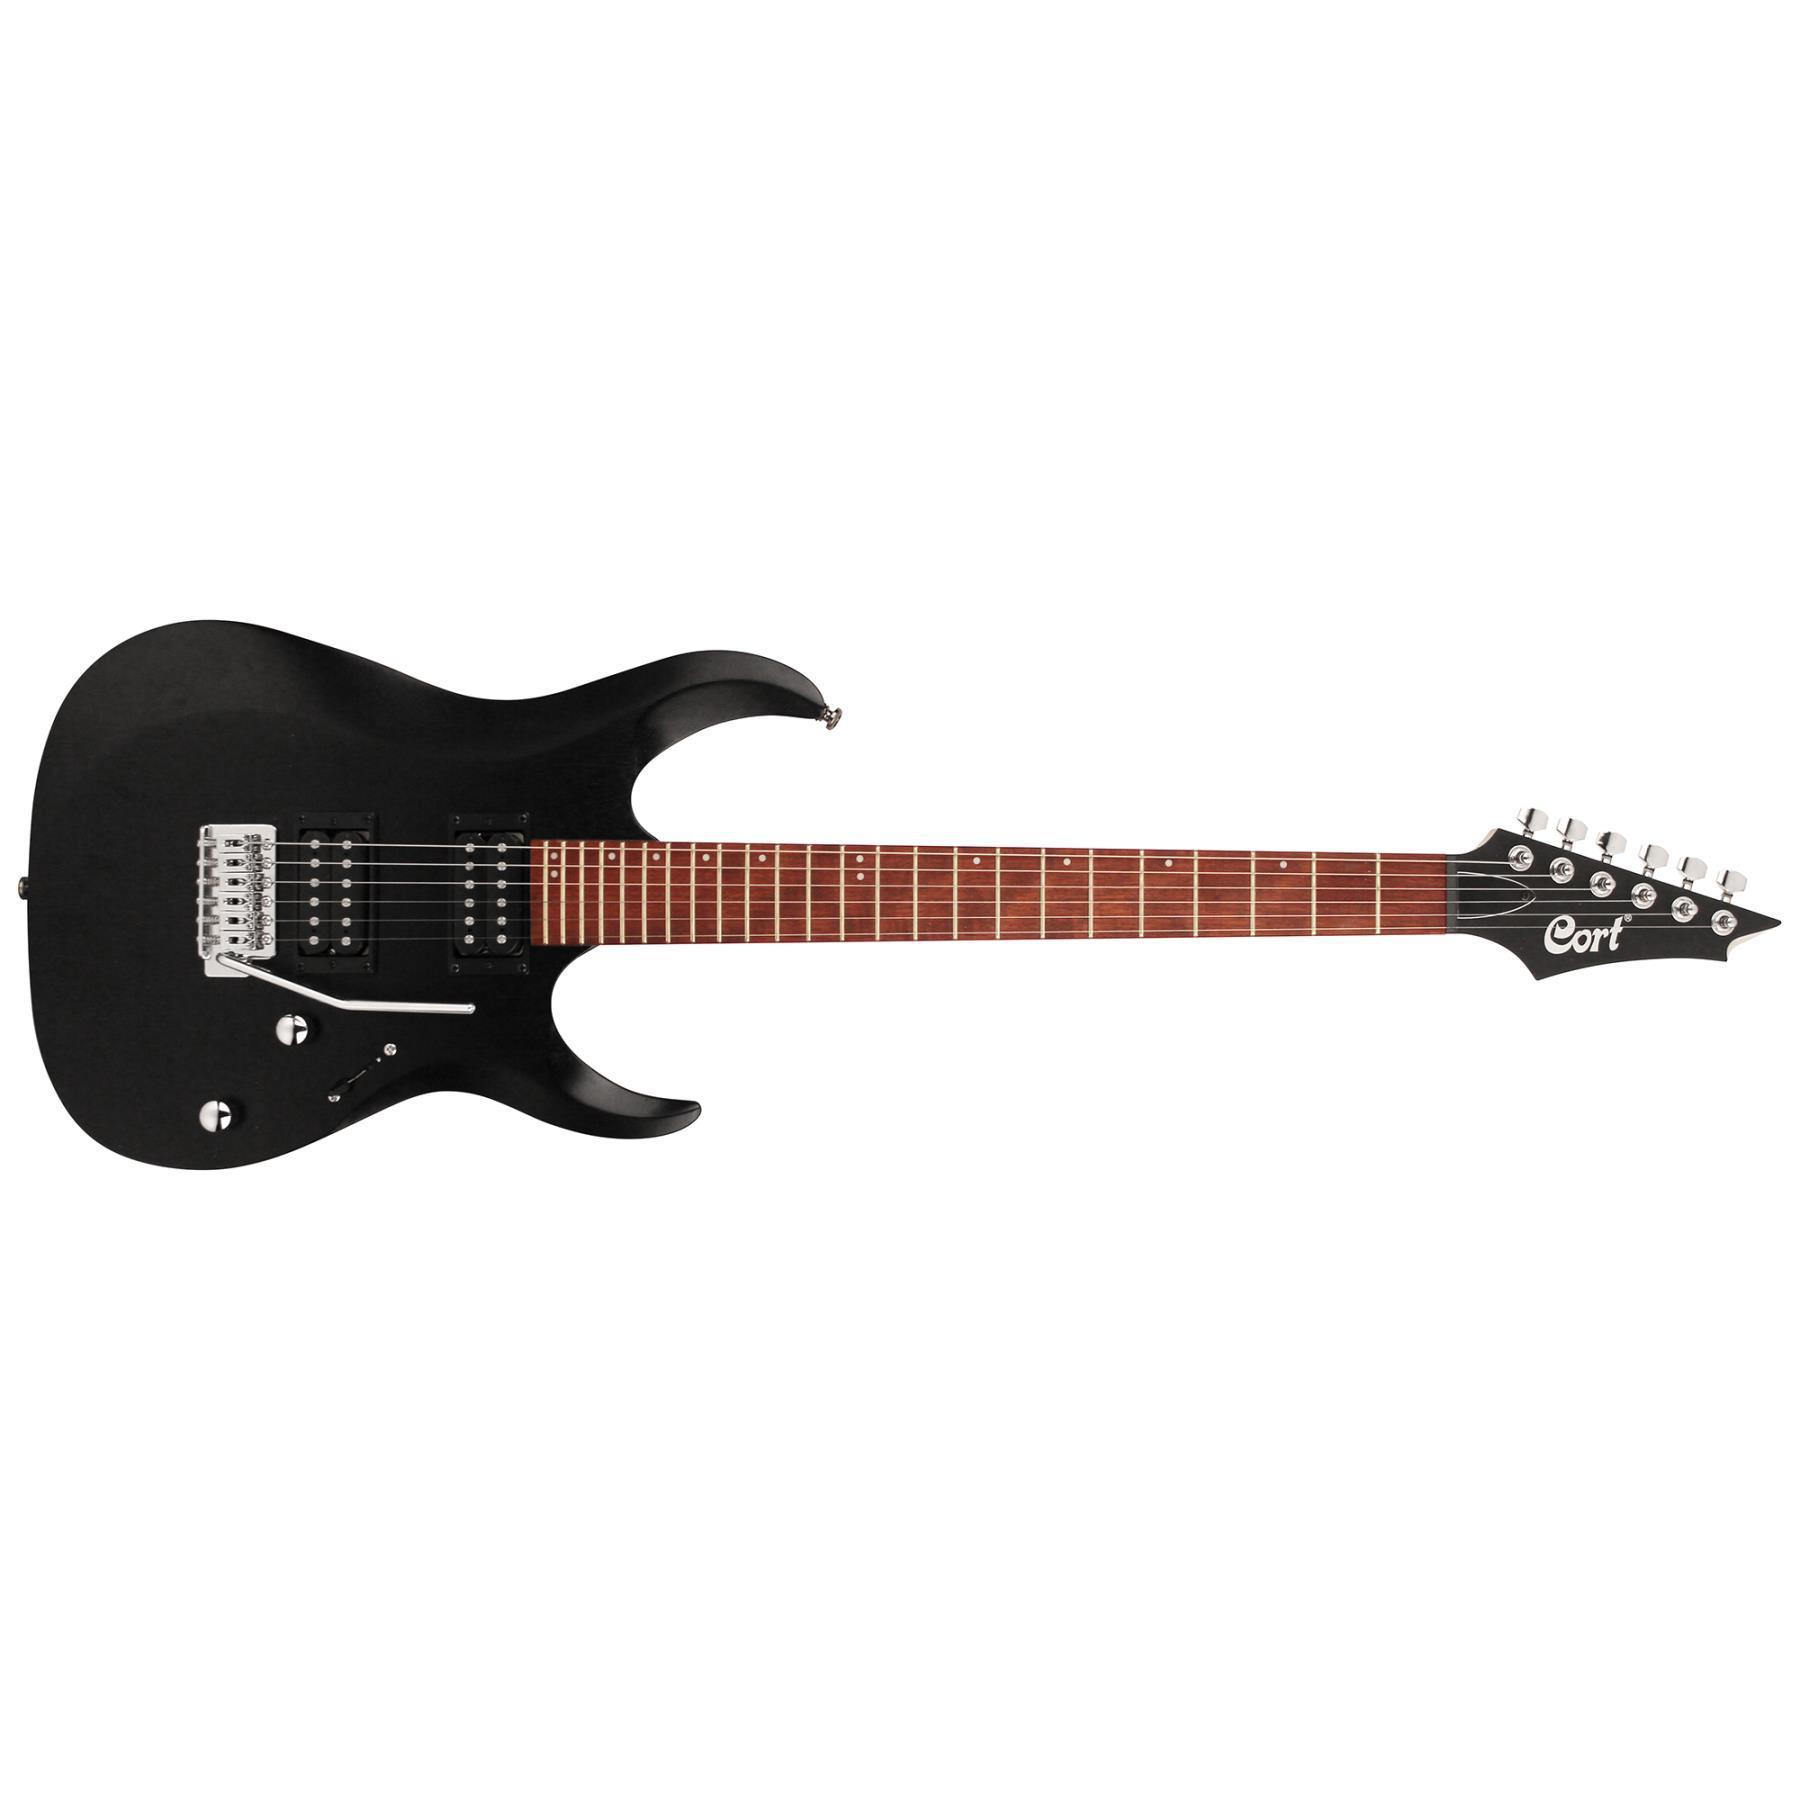 Cort - Guitarra Eléctrica X, Color: Negro Mate Mod.X100-OPBK_22